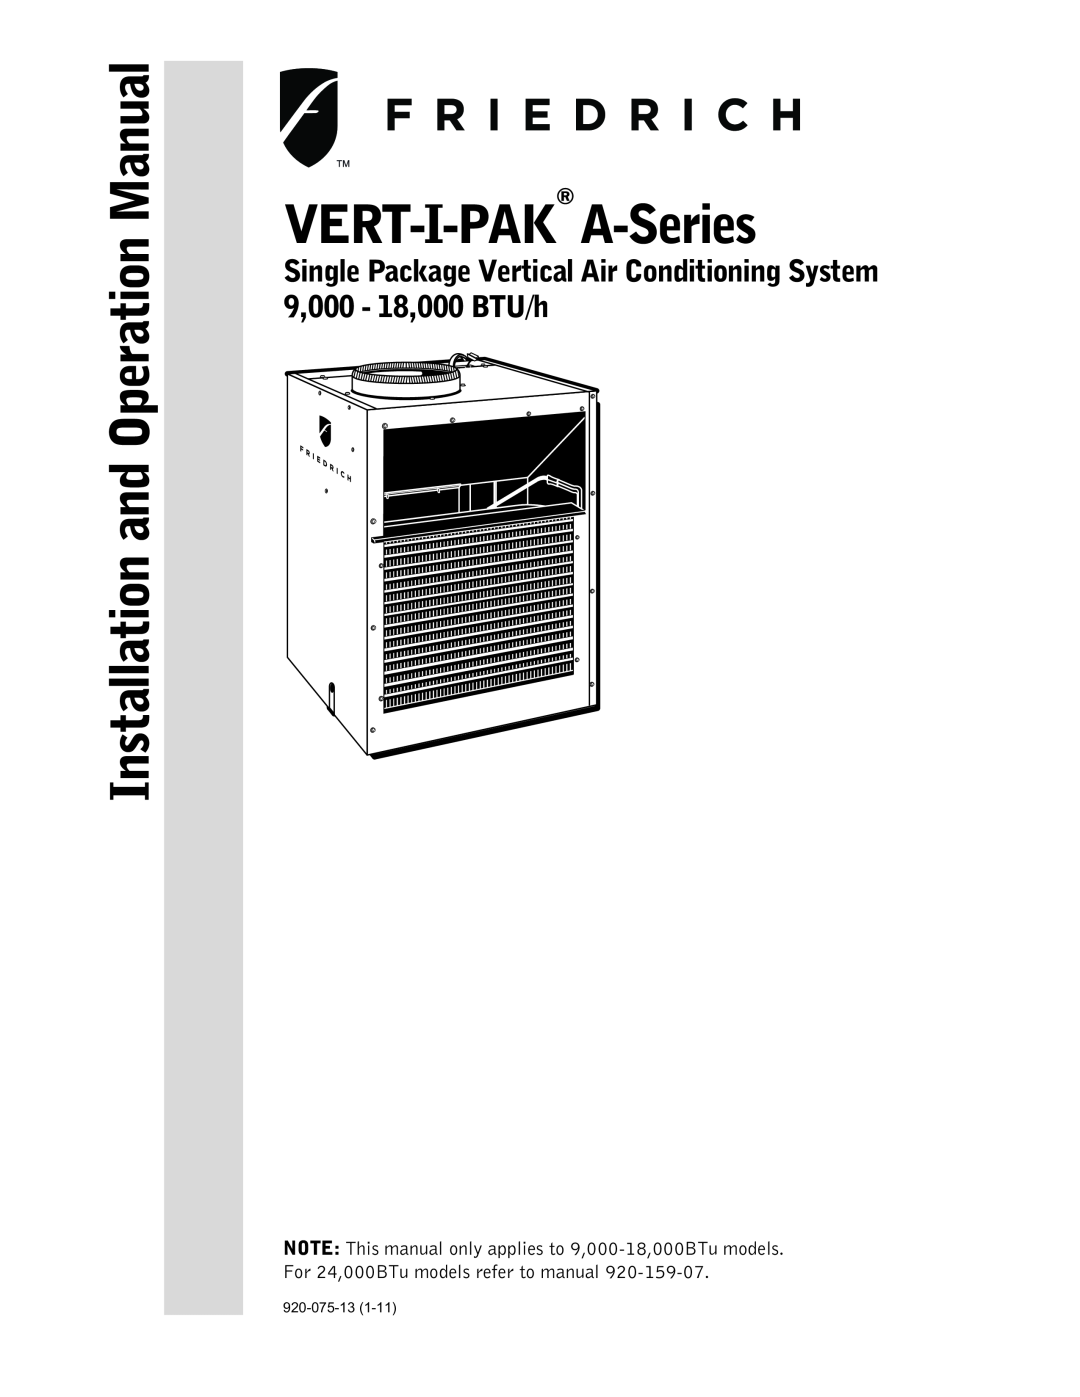 Friedrich 920-075-13 (1-11) operation manual VERT-I-PAK A-Series, Installation and Operation Manual 